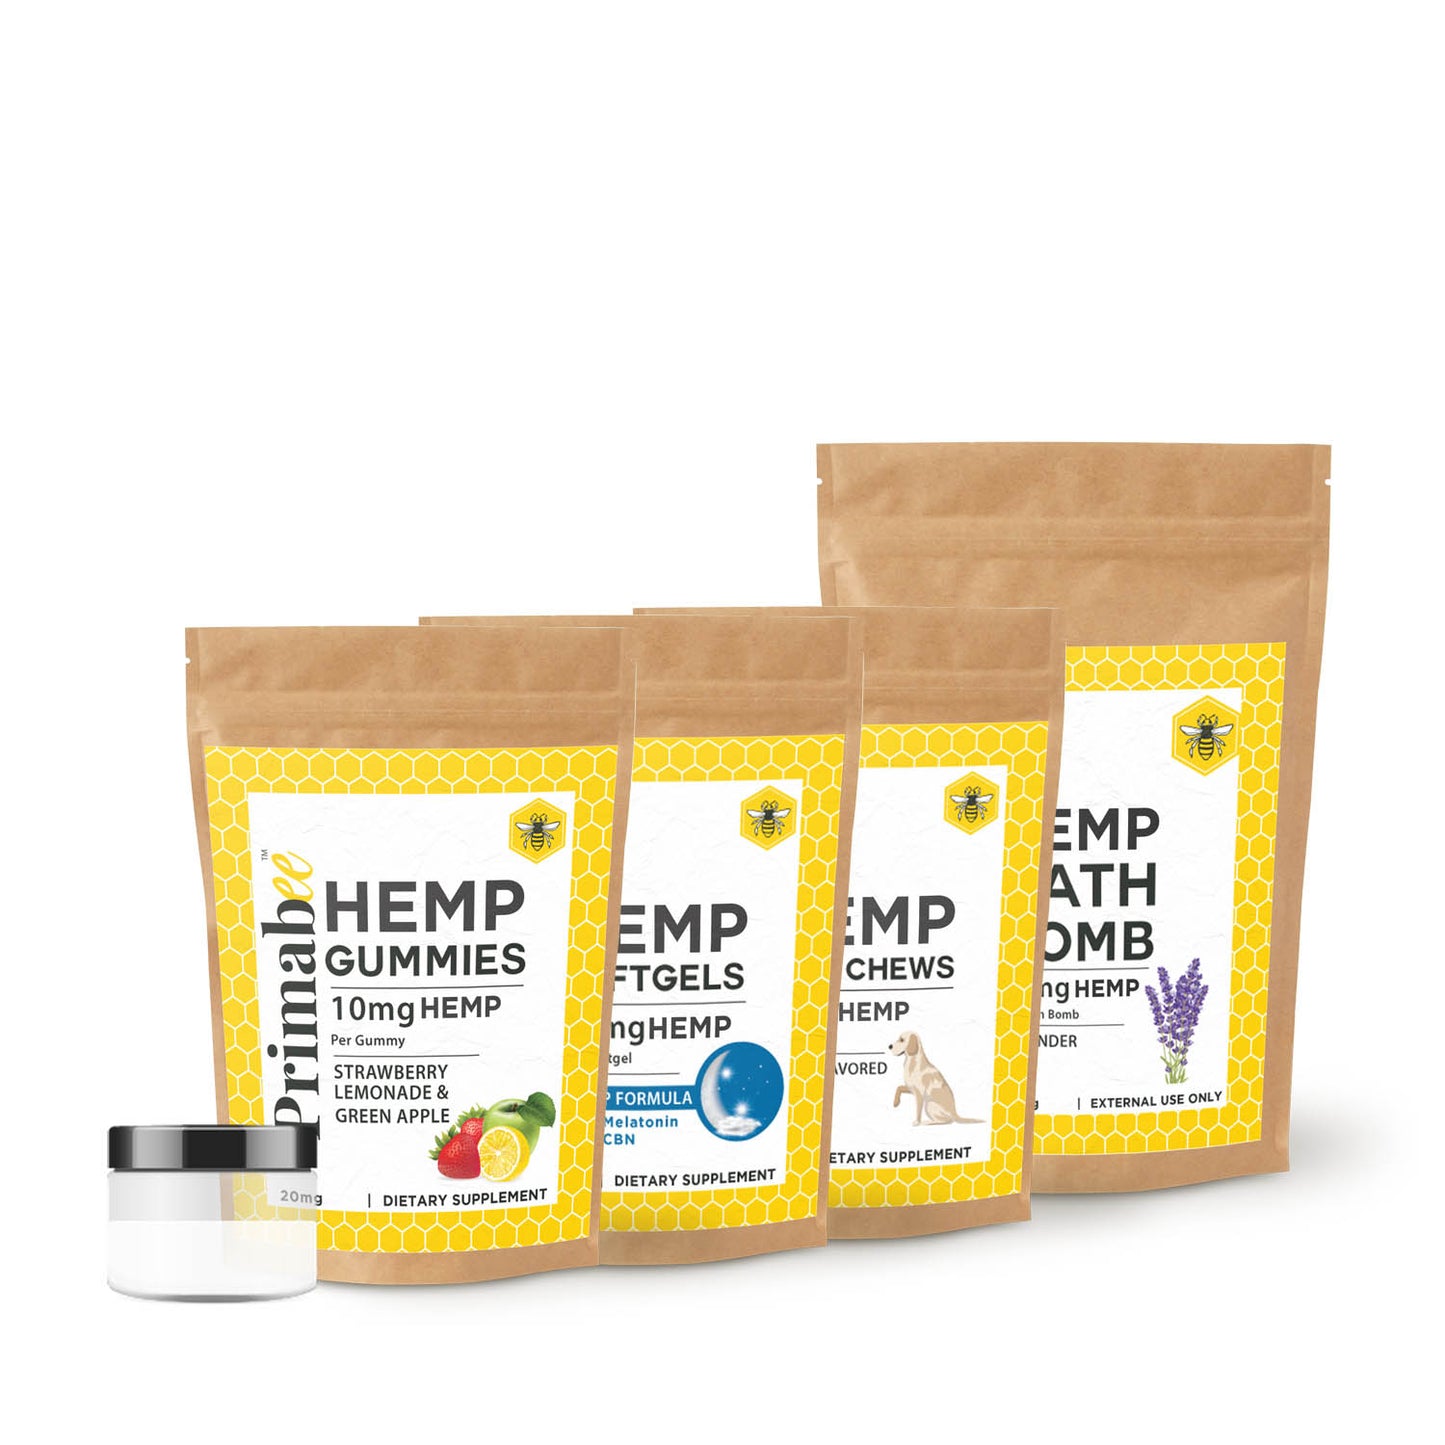 Introduction to Hemp Wellness Sampler